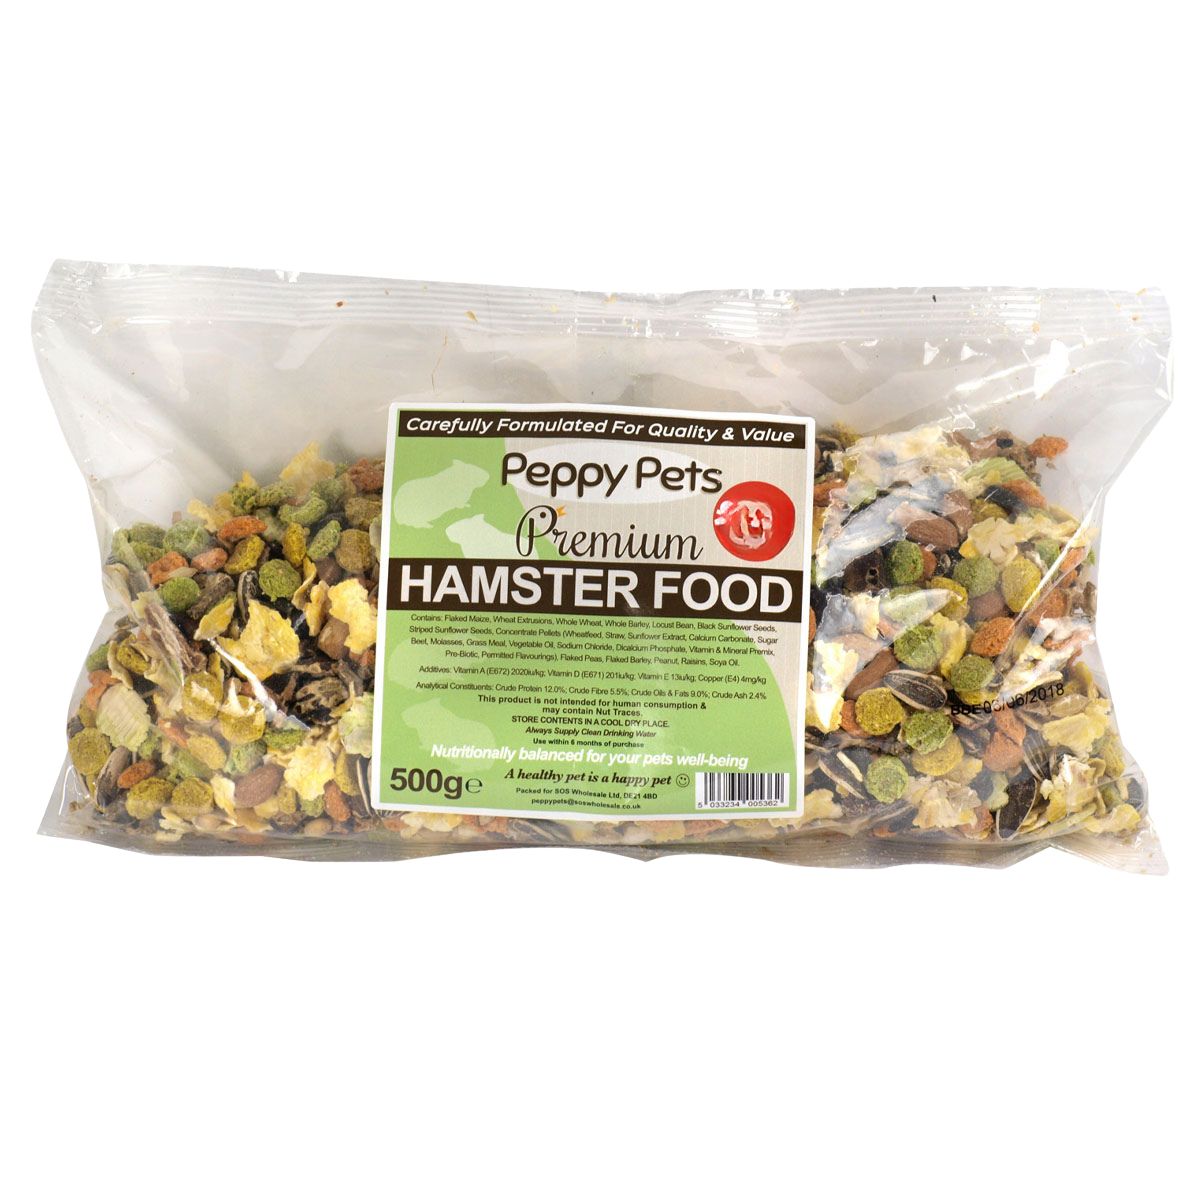 A bag of Peppy Pets - Hamster Food - 500g.